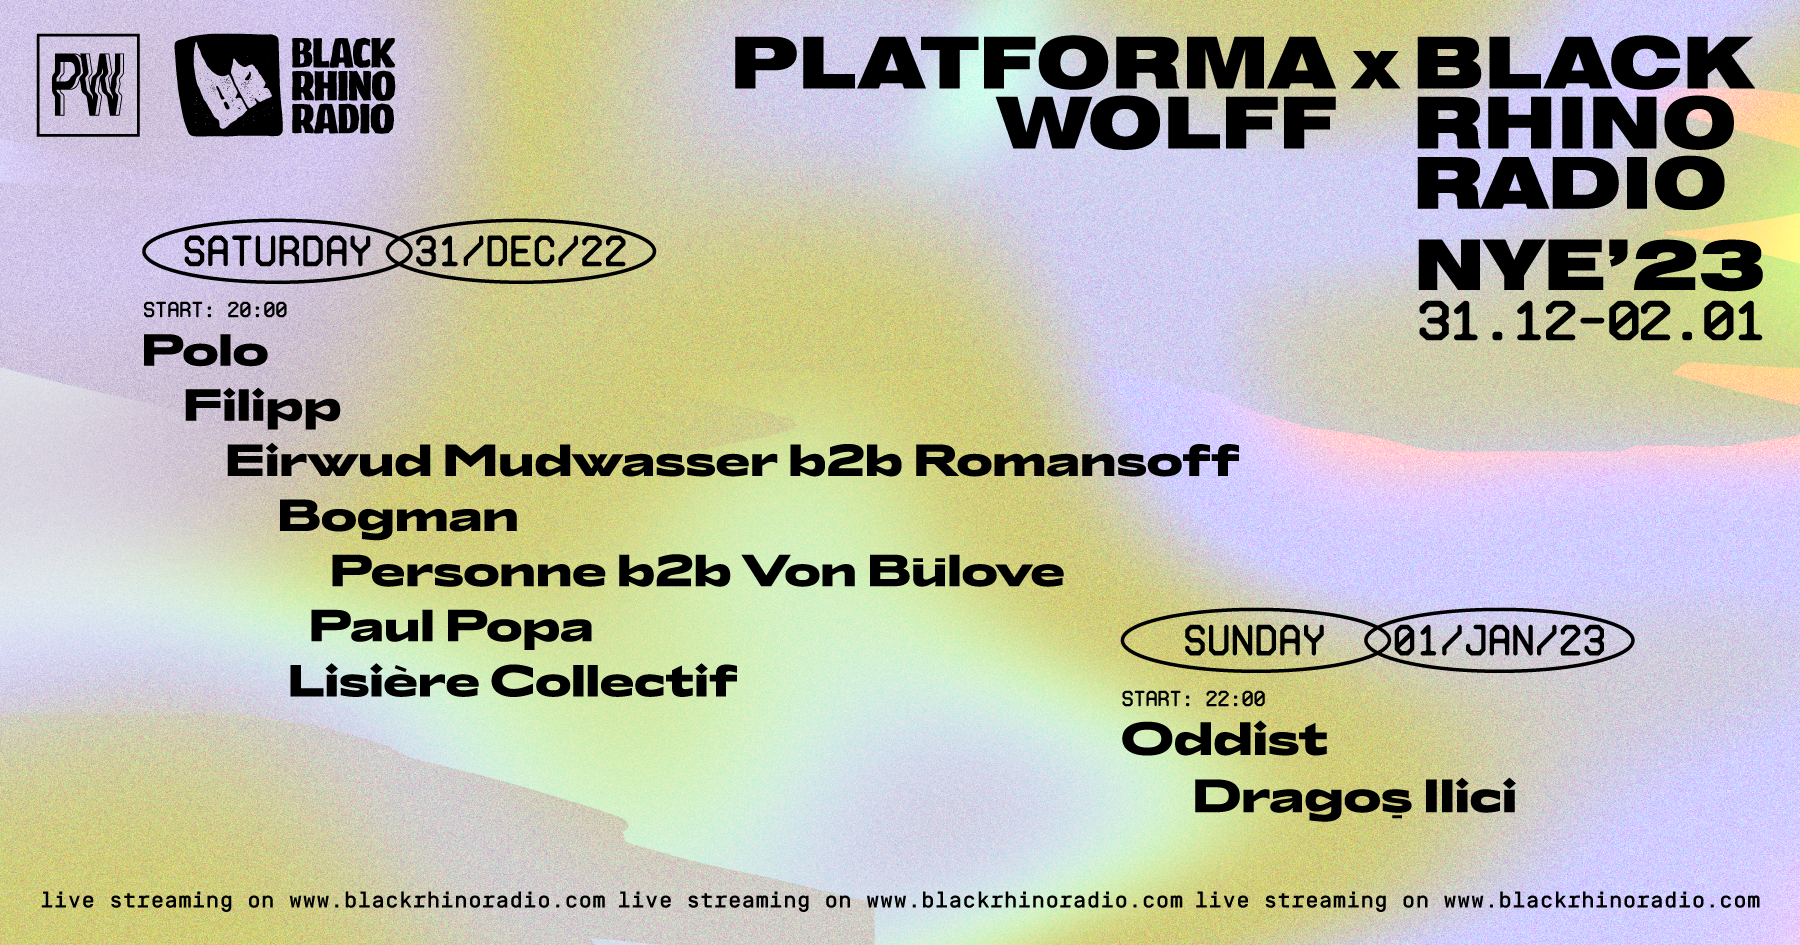 NYE • Platforma Wolff x Black Rhino Radio - フライヤー表